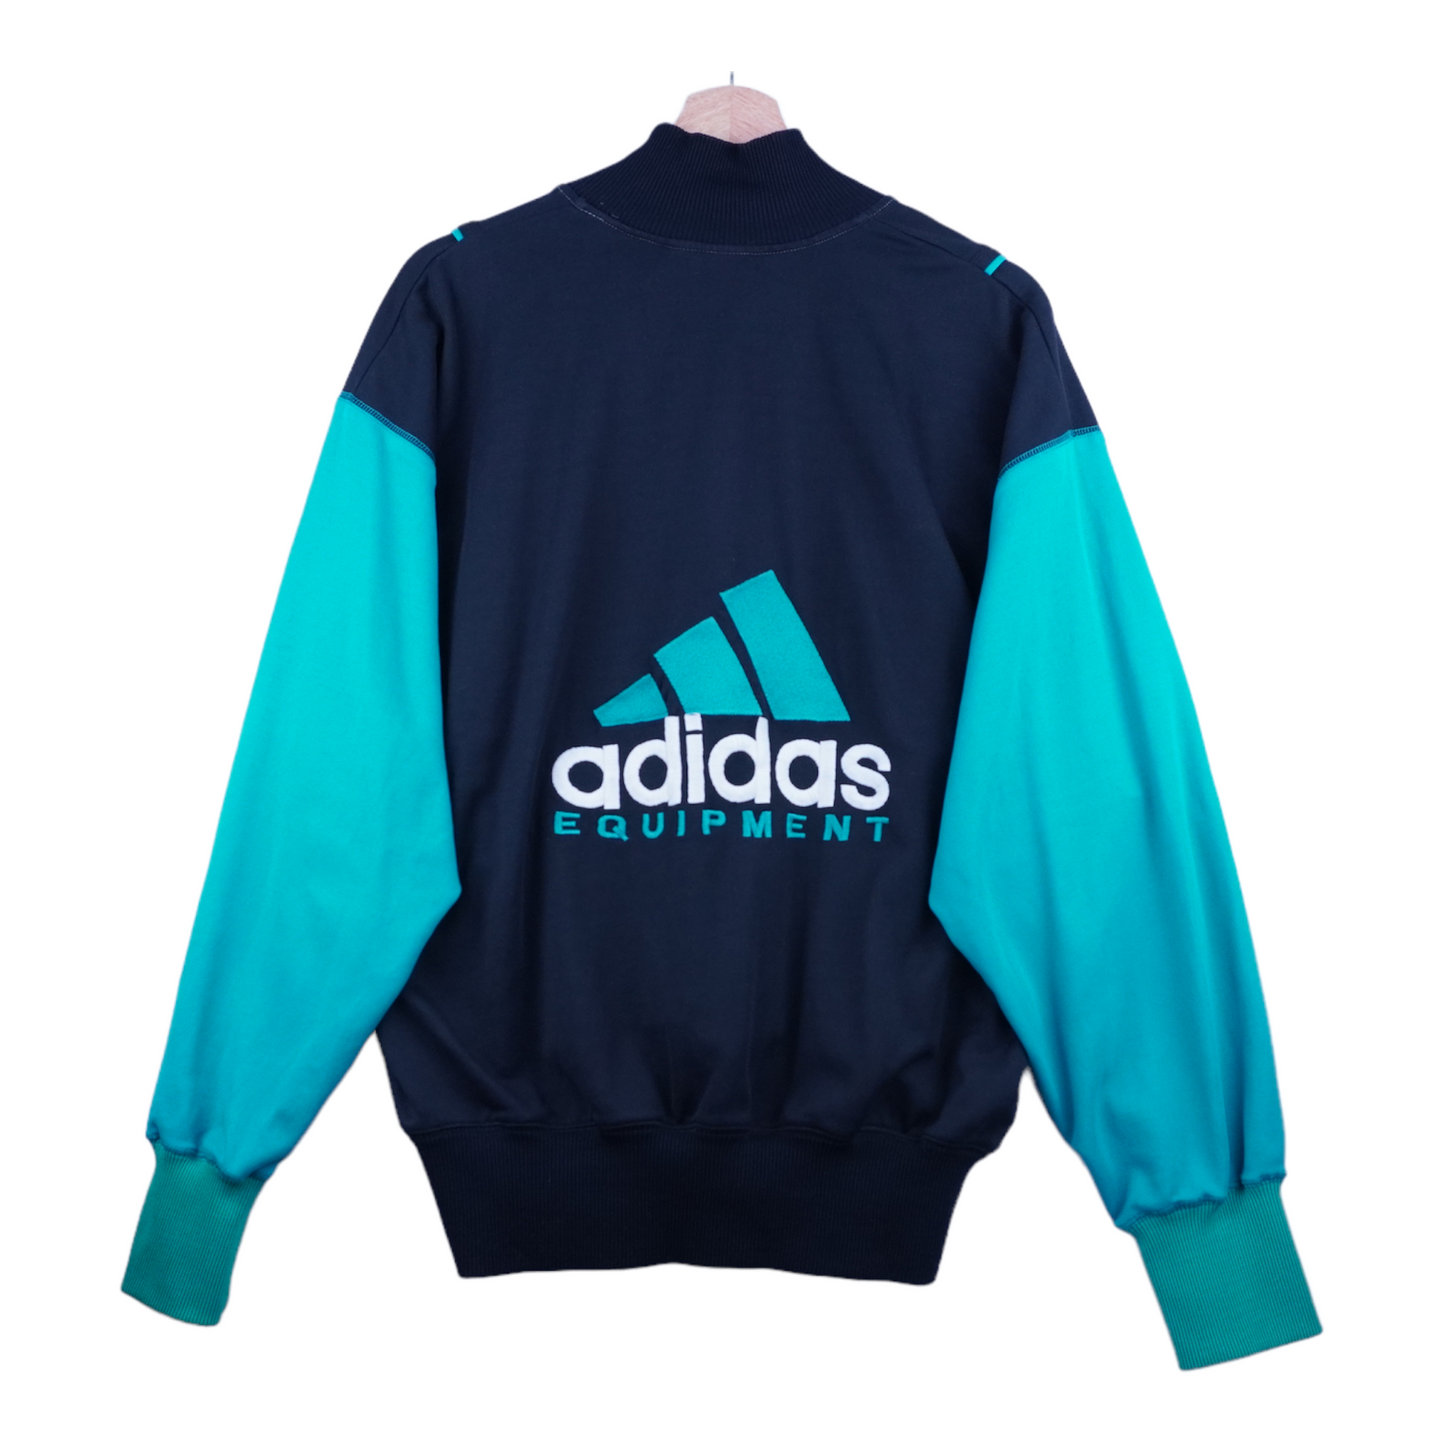 90s Adidas Equipment Sweatshirt Black Green M